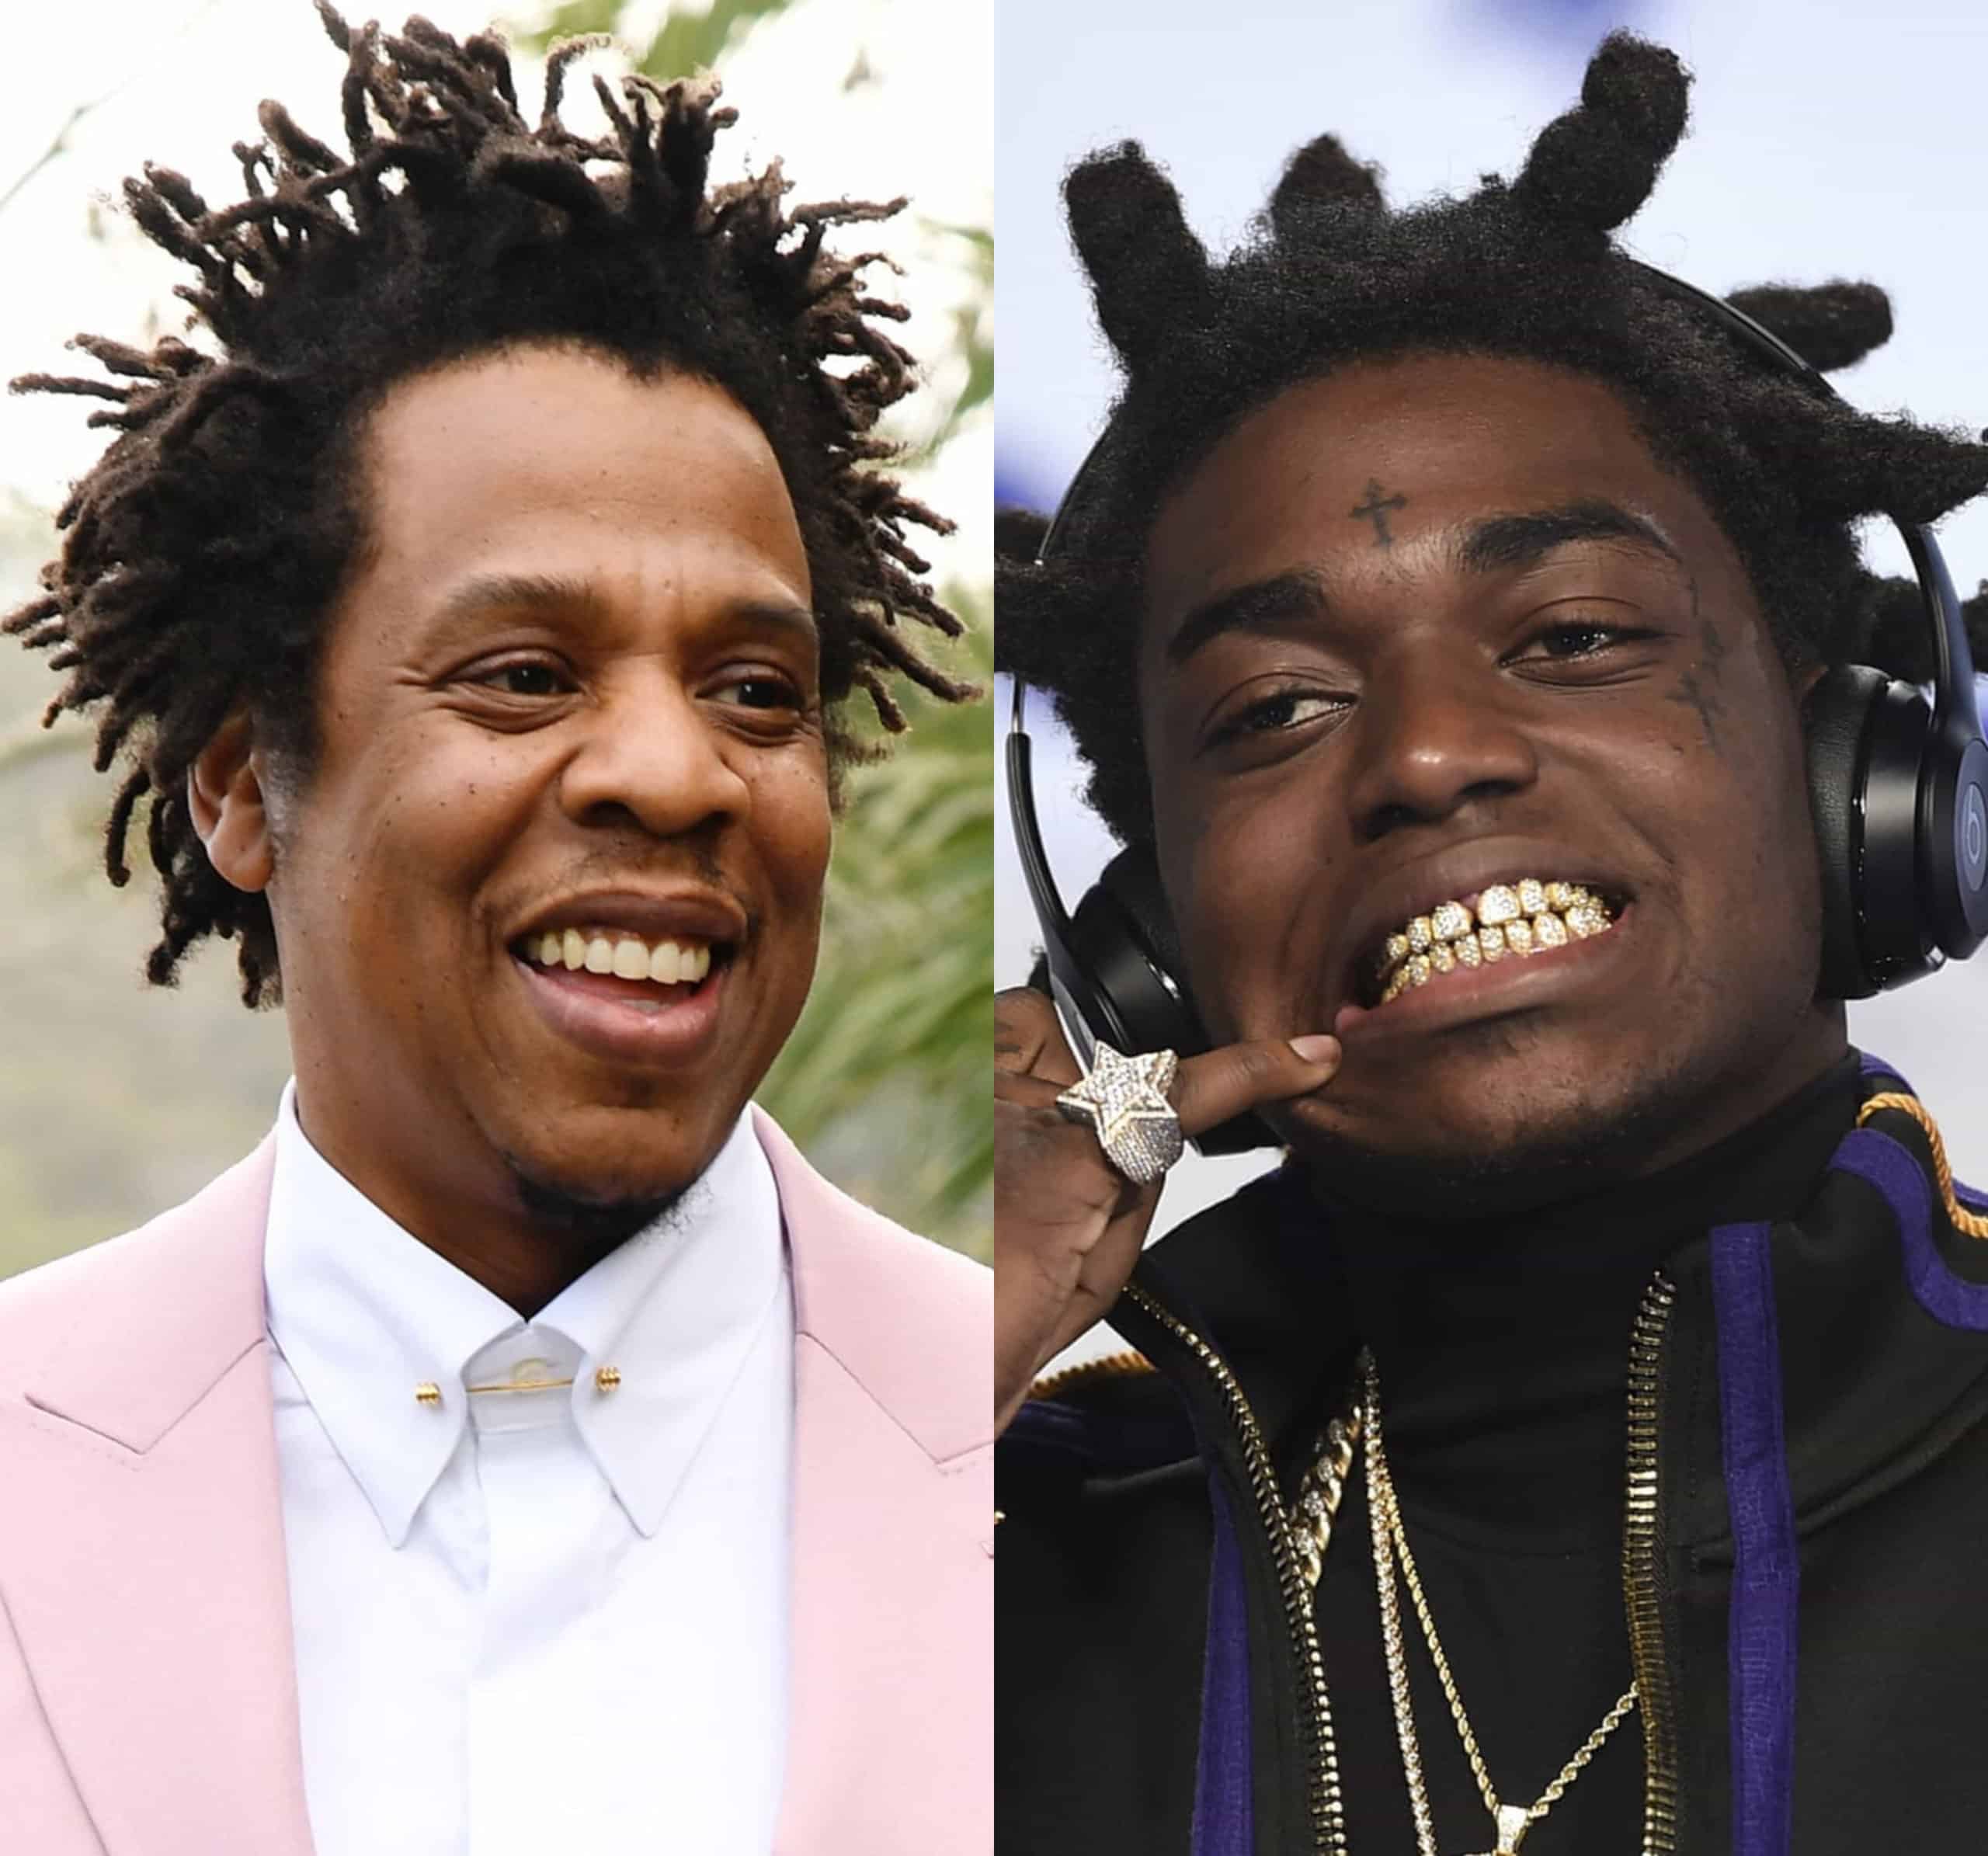 Kodak Black Wants To VERZUZ Battle Jay-Z If I Win, He Make Me Vice President of Roc Nation